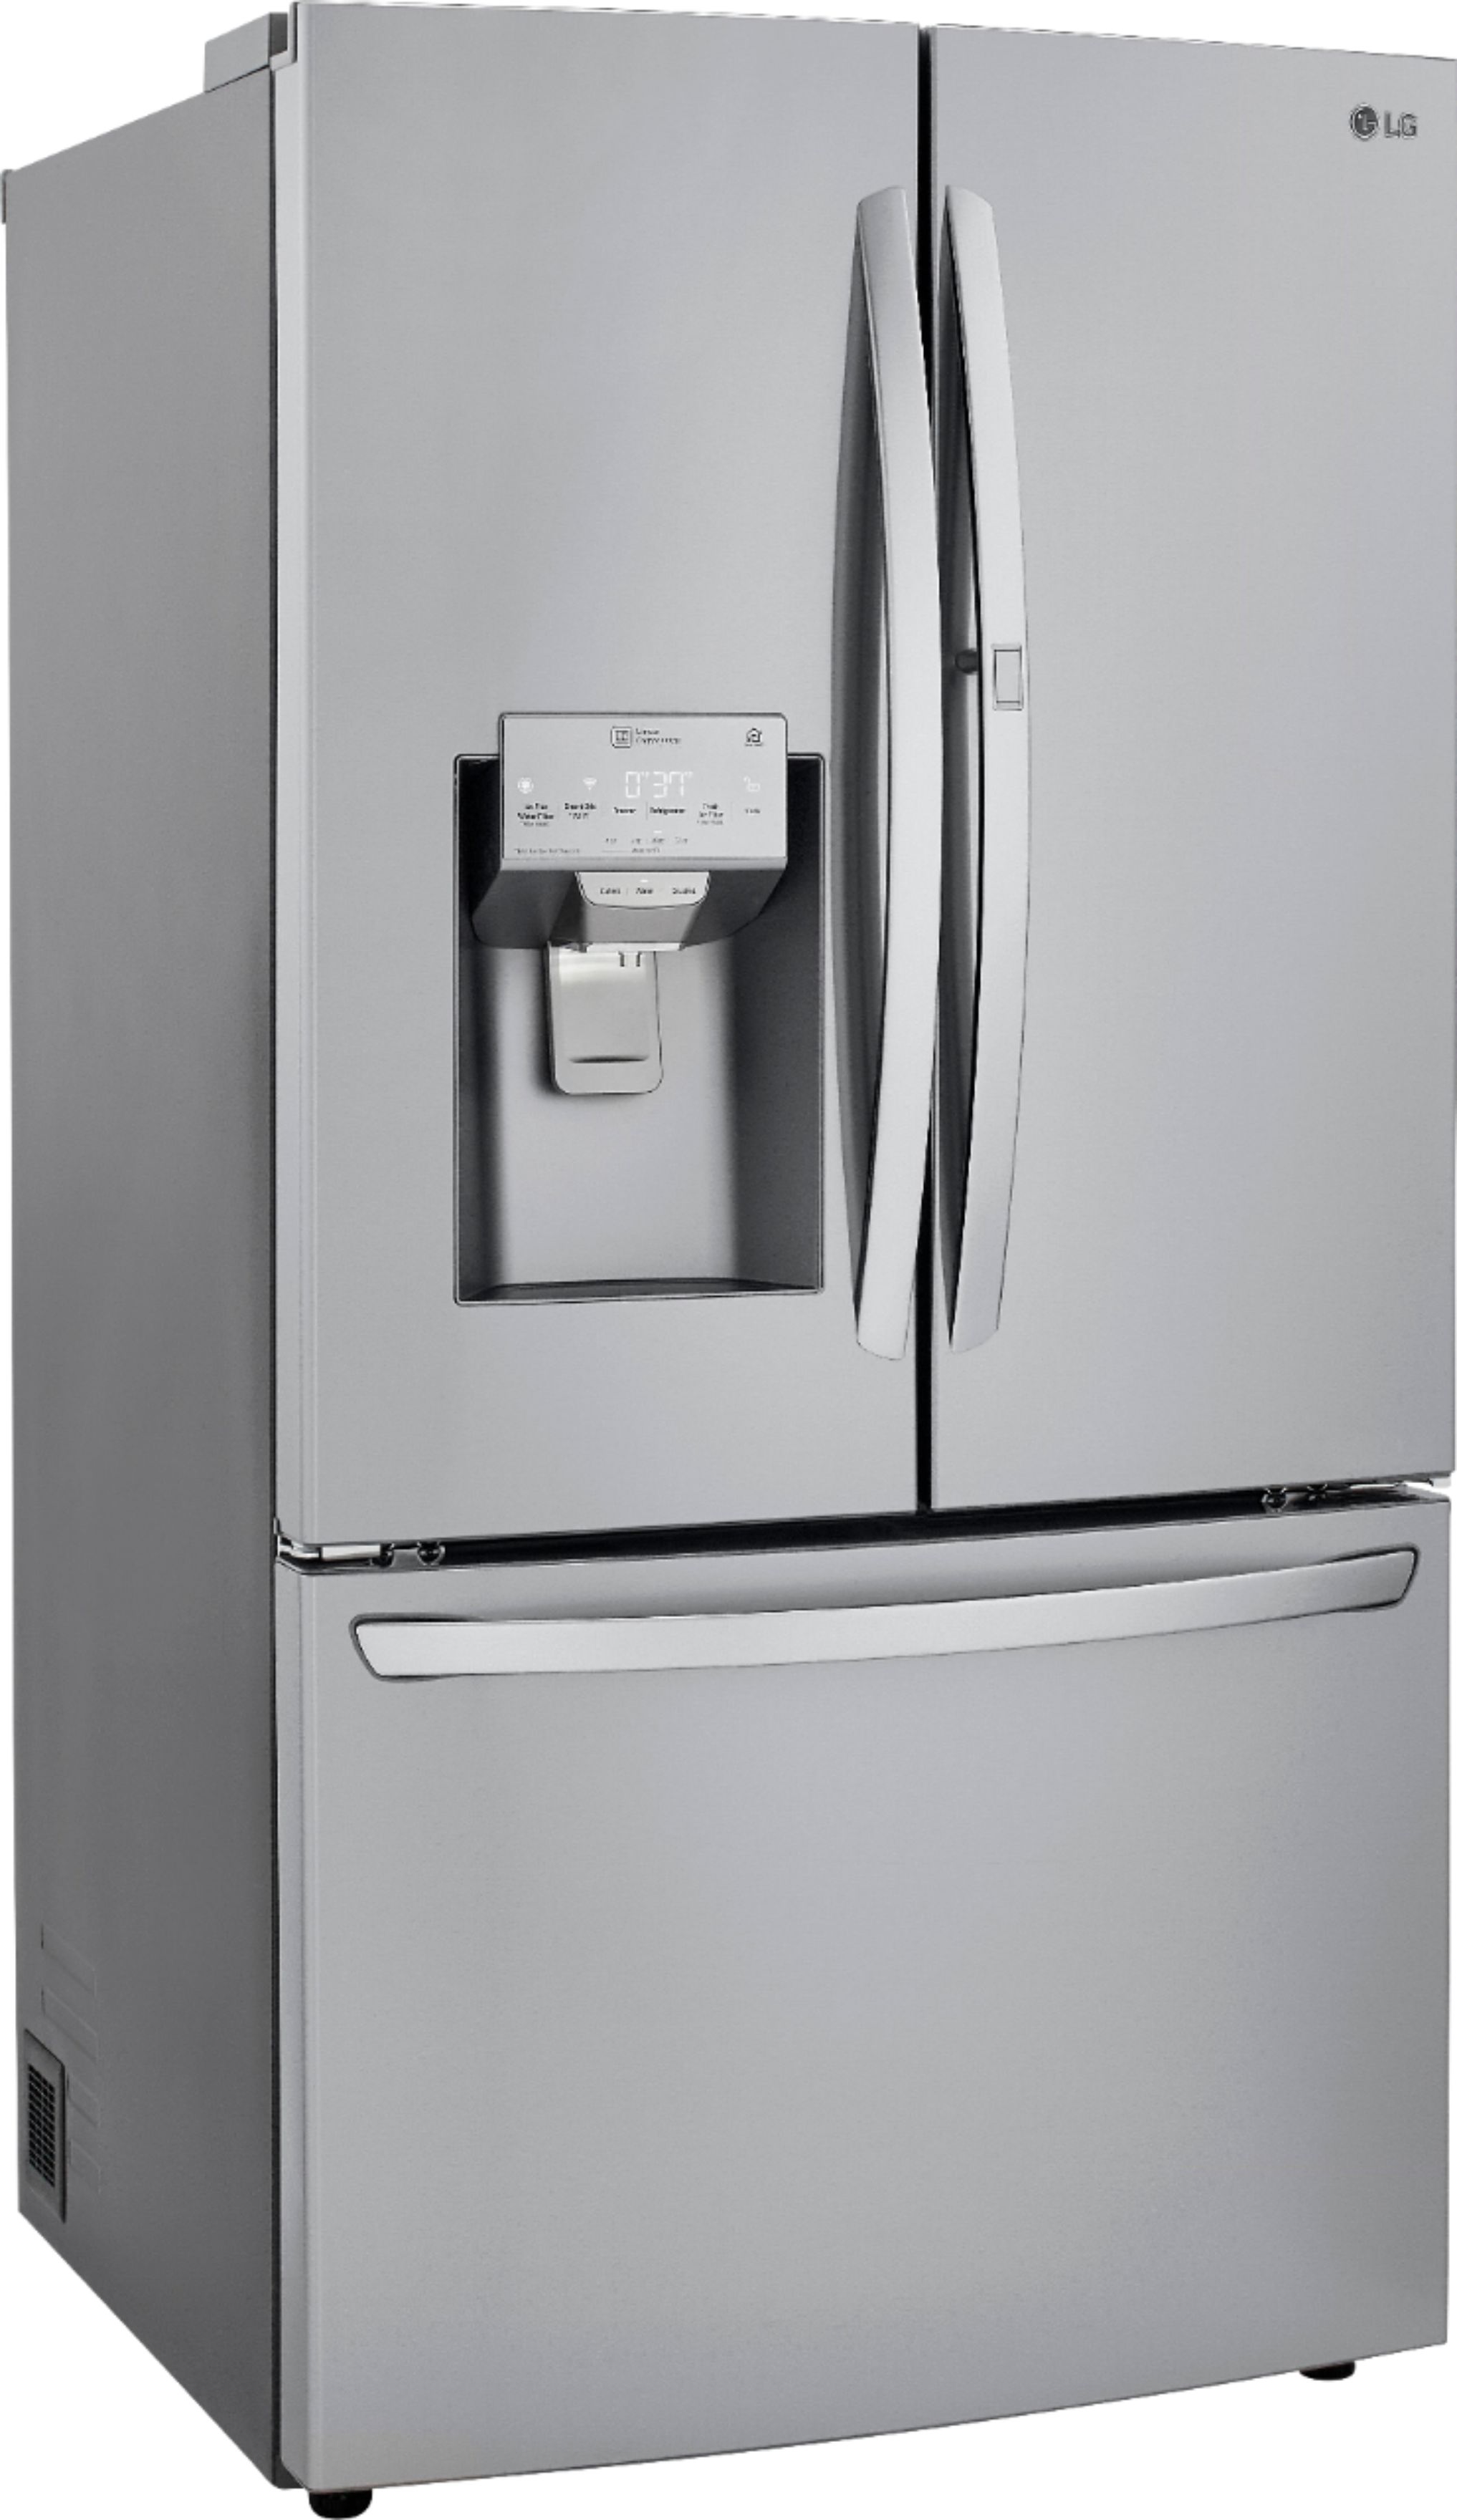 Angle View: LG LRFDC2406S Refrigerator/Freezer